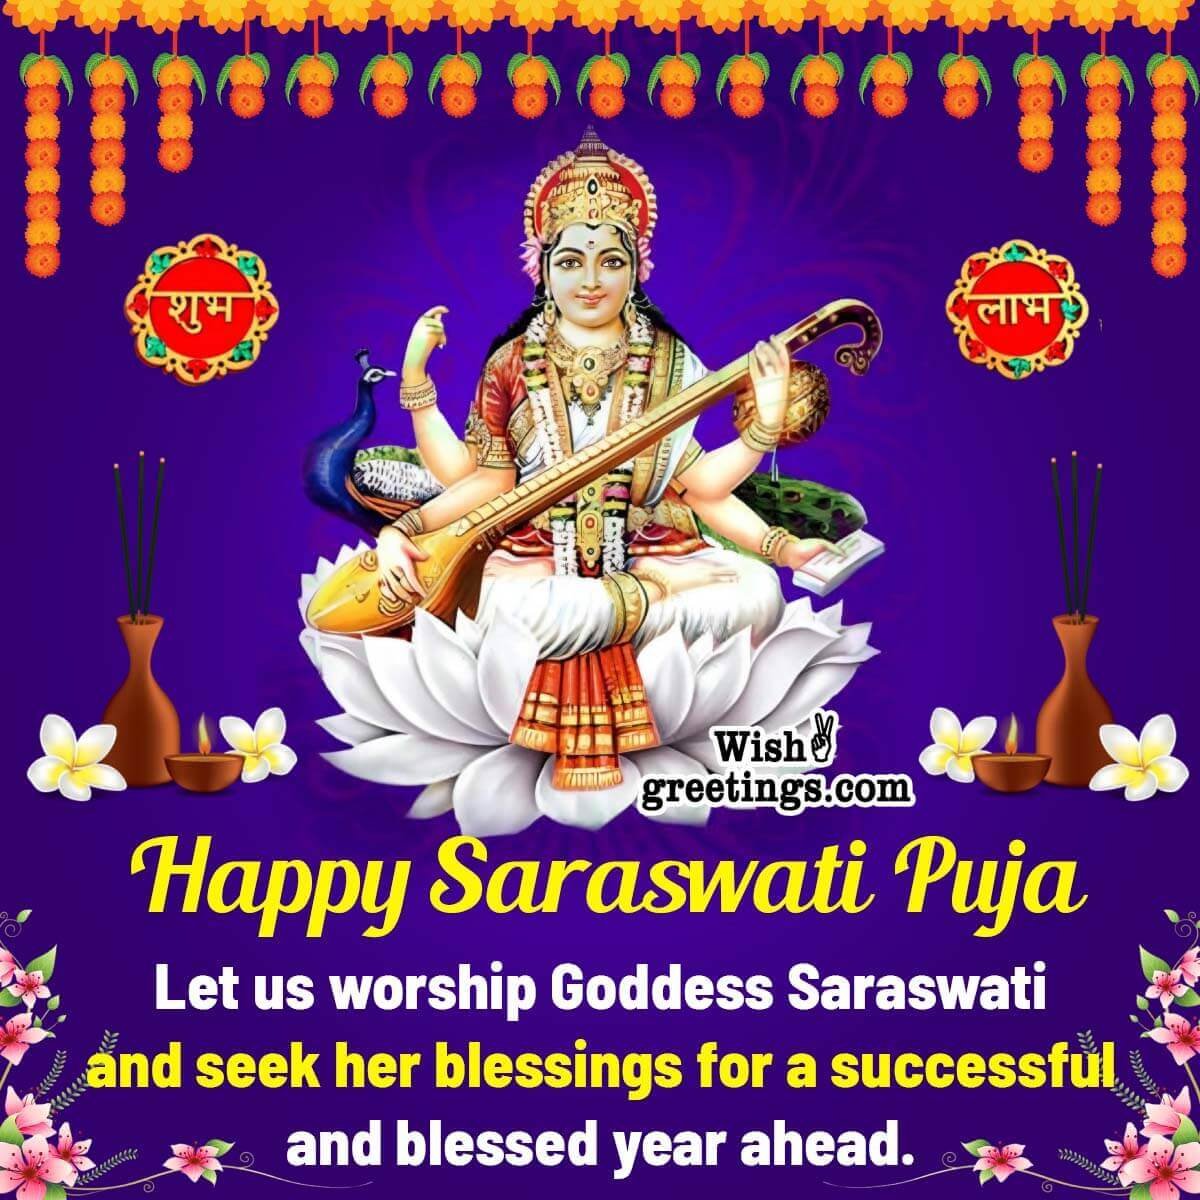 Saraswatli Puja Blessing Image